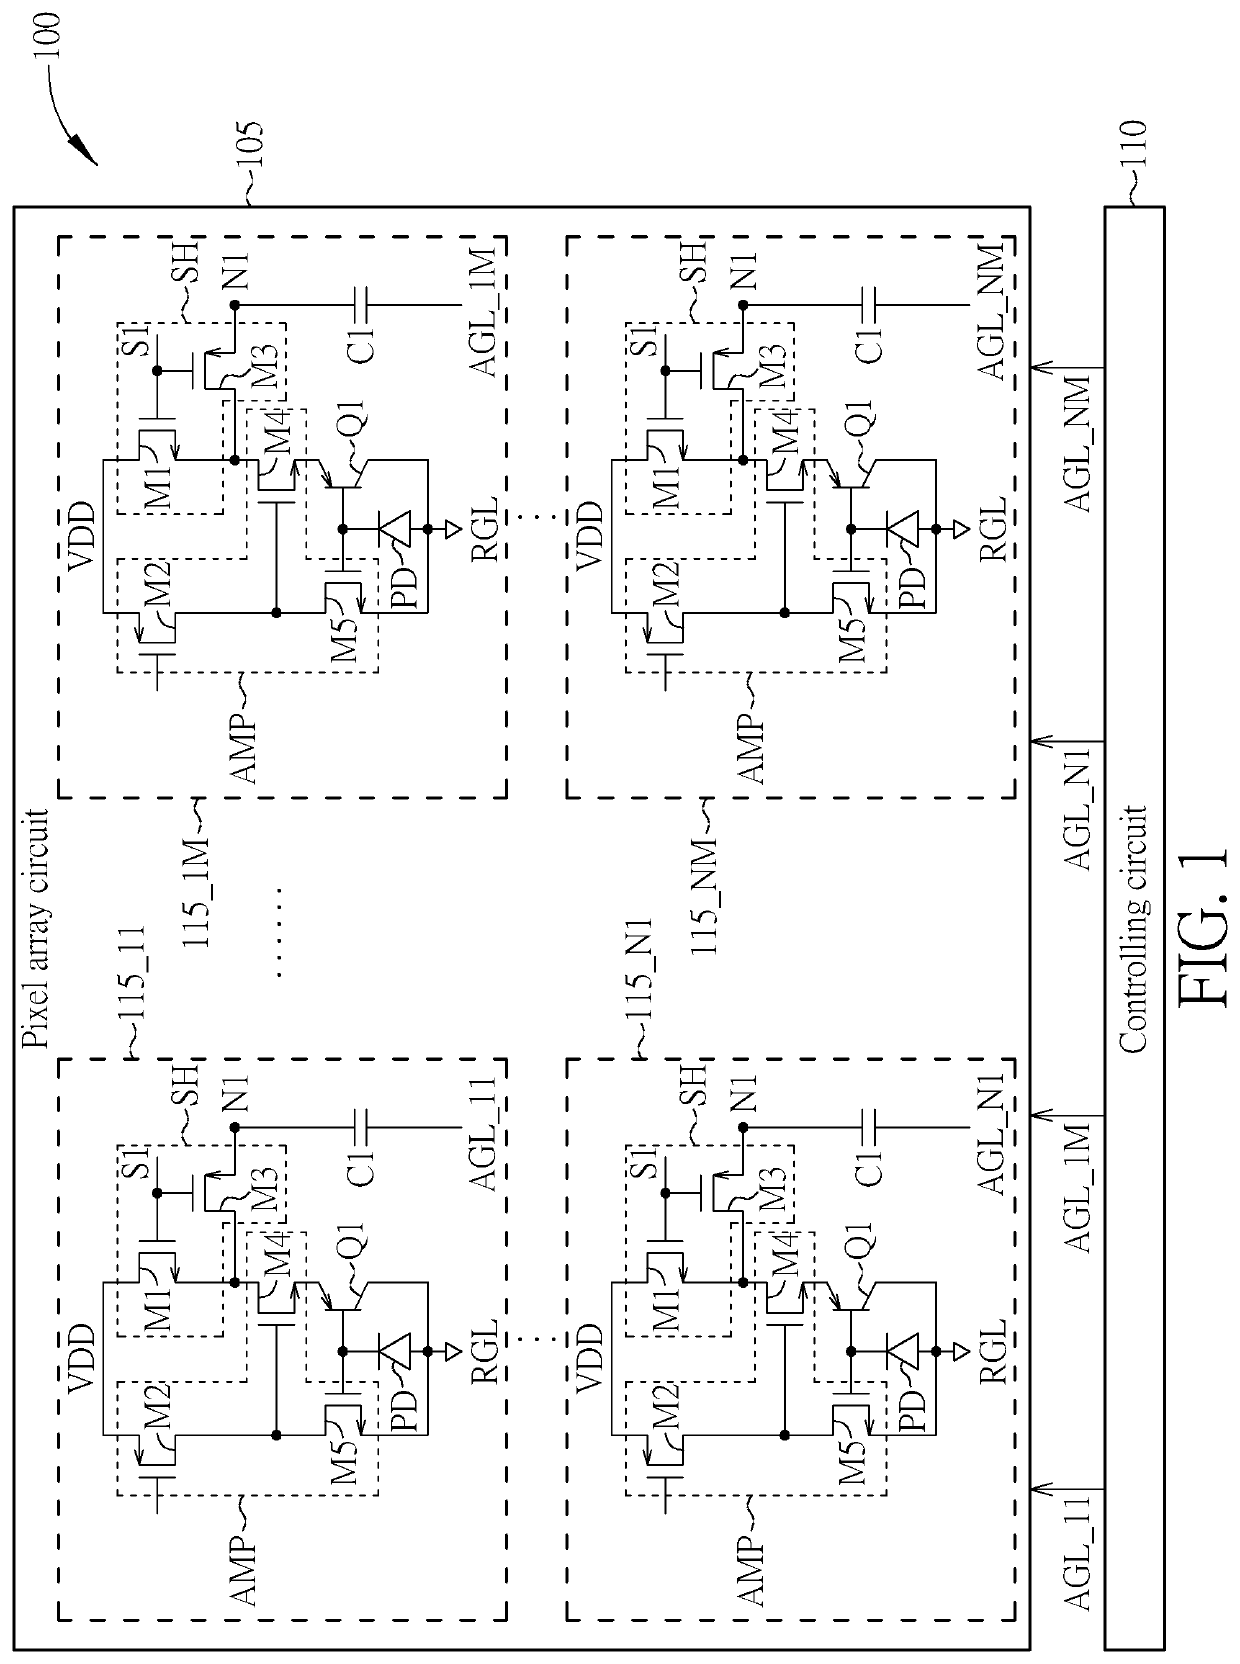 Scheme of boosting adjustable ground level(s) of storage capacitor(s) of BJT pixel circuit(s) in pixel array circuit of image sensor apparatus